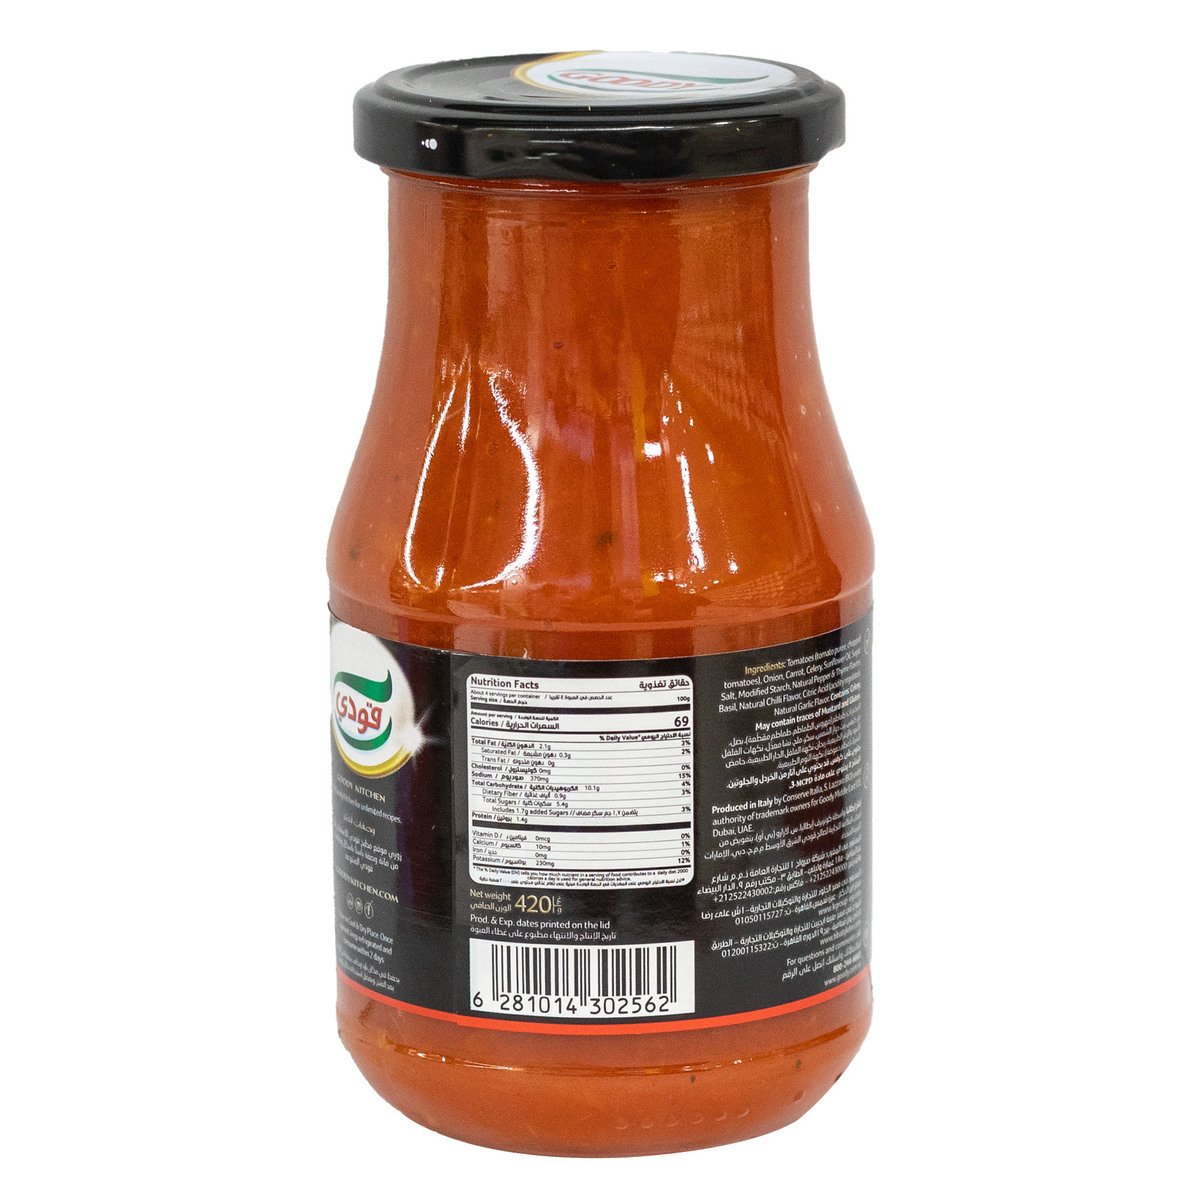 Goody Arrabbiata Pasta Sauce 420 g